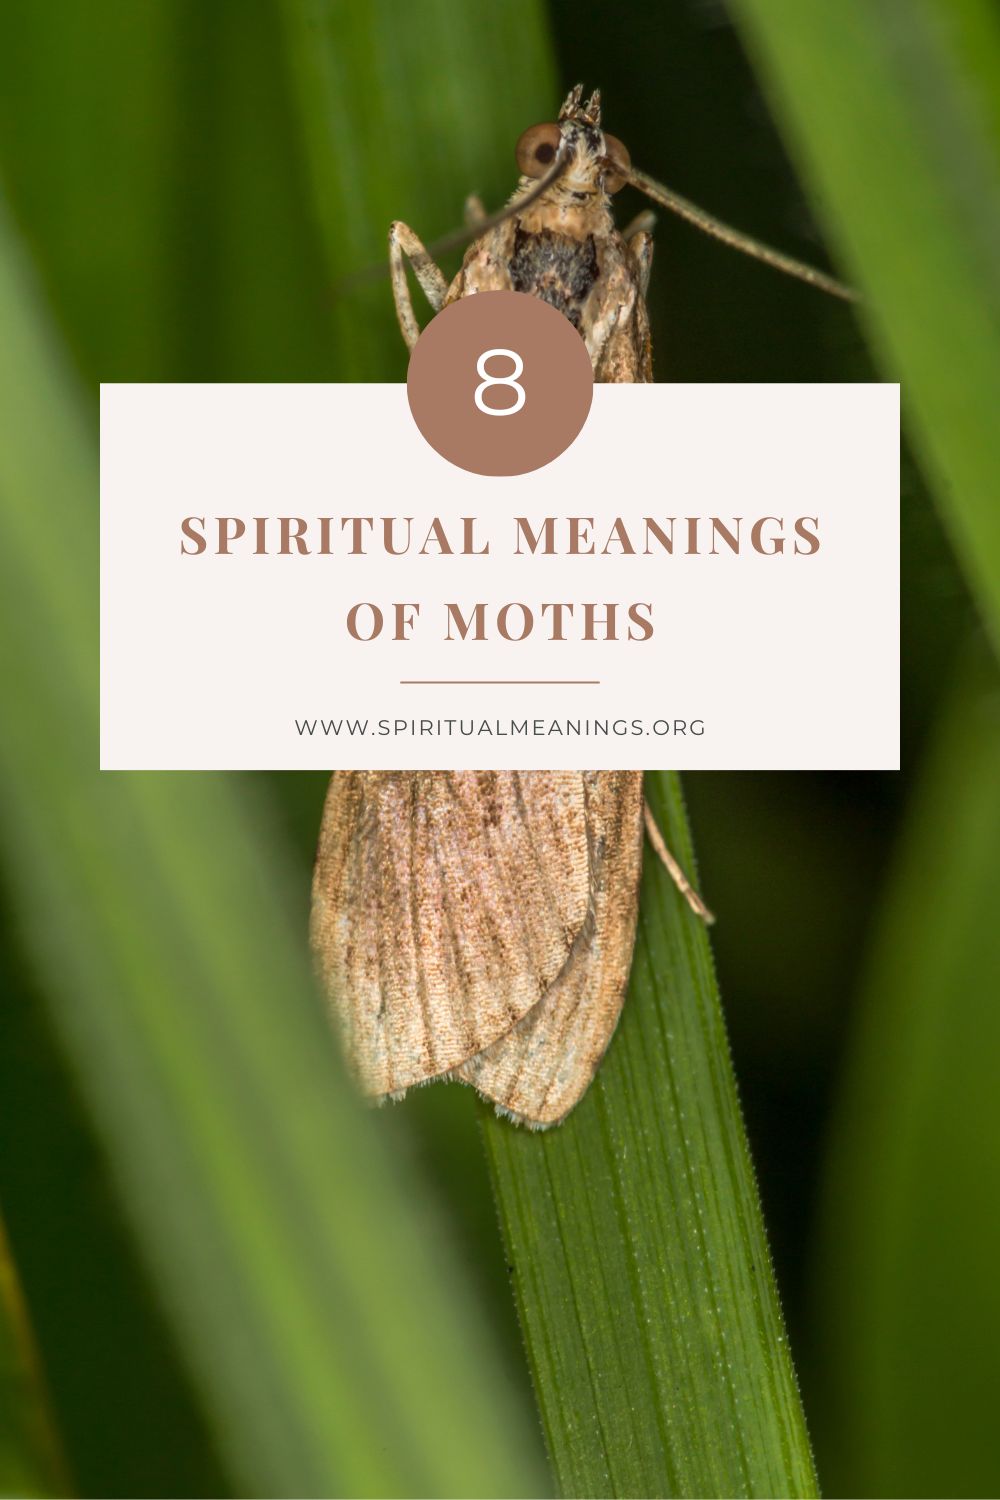 The Characteristics of Moths